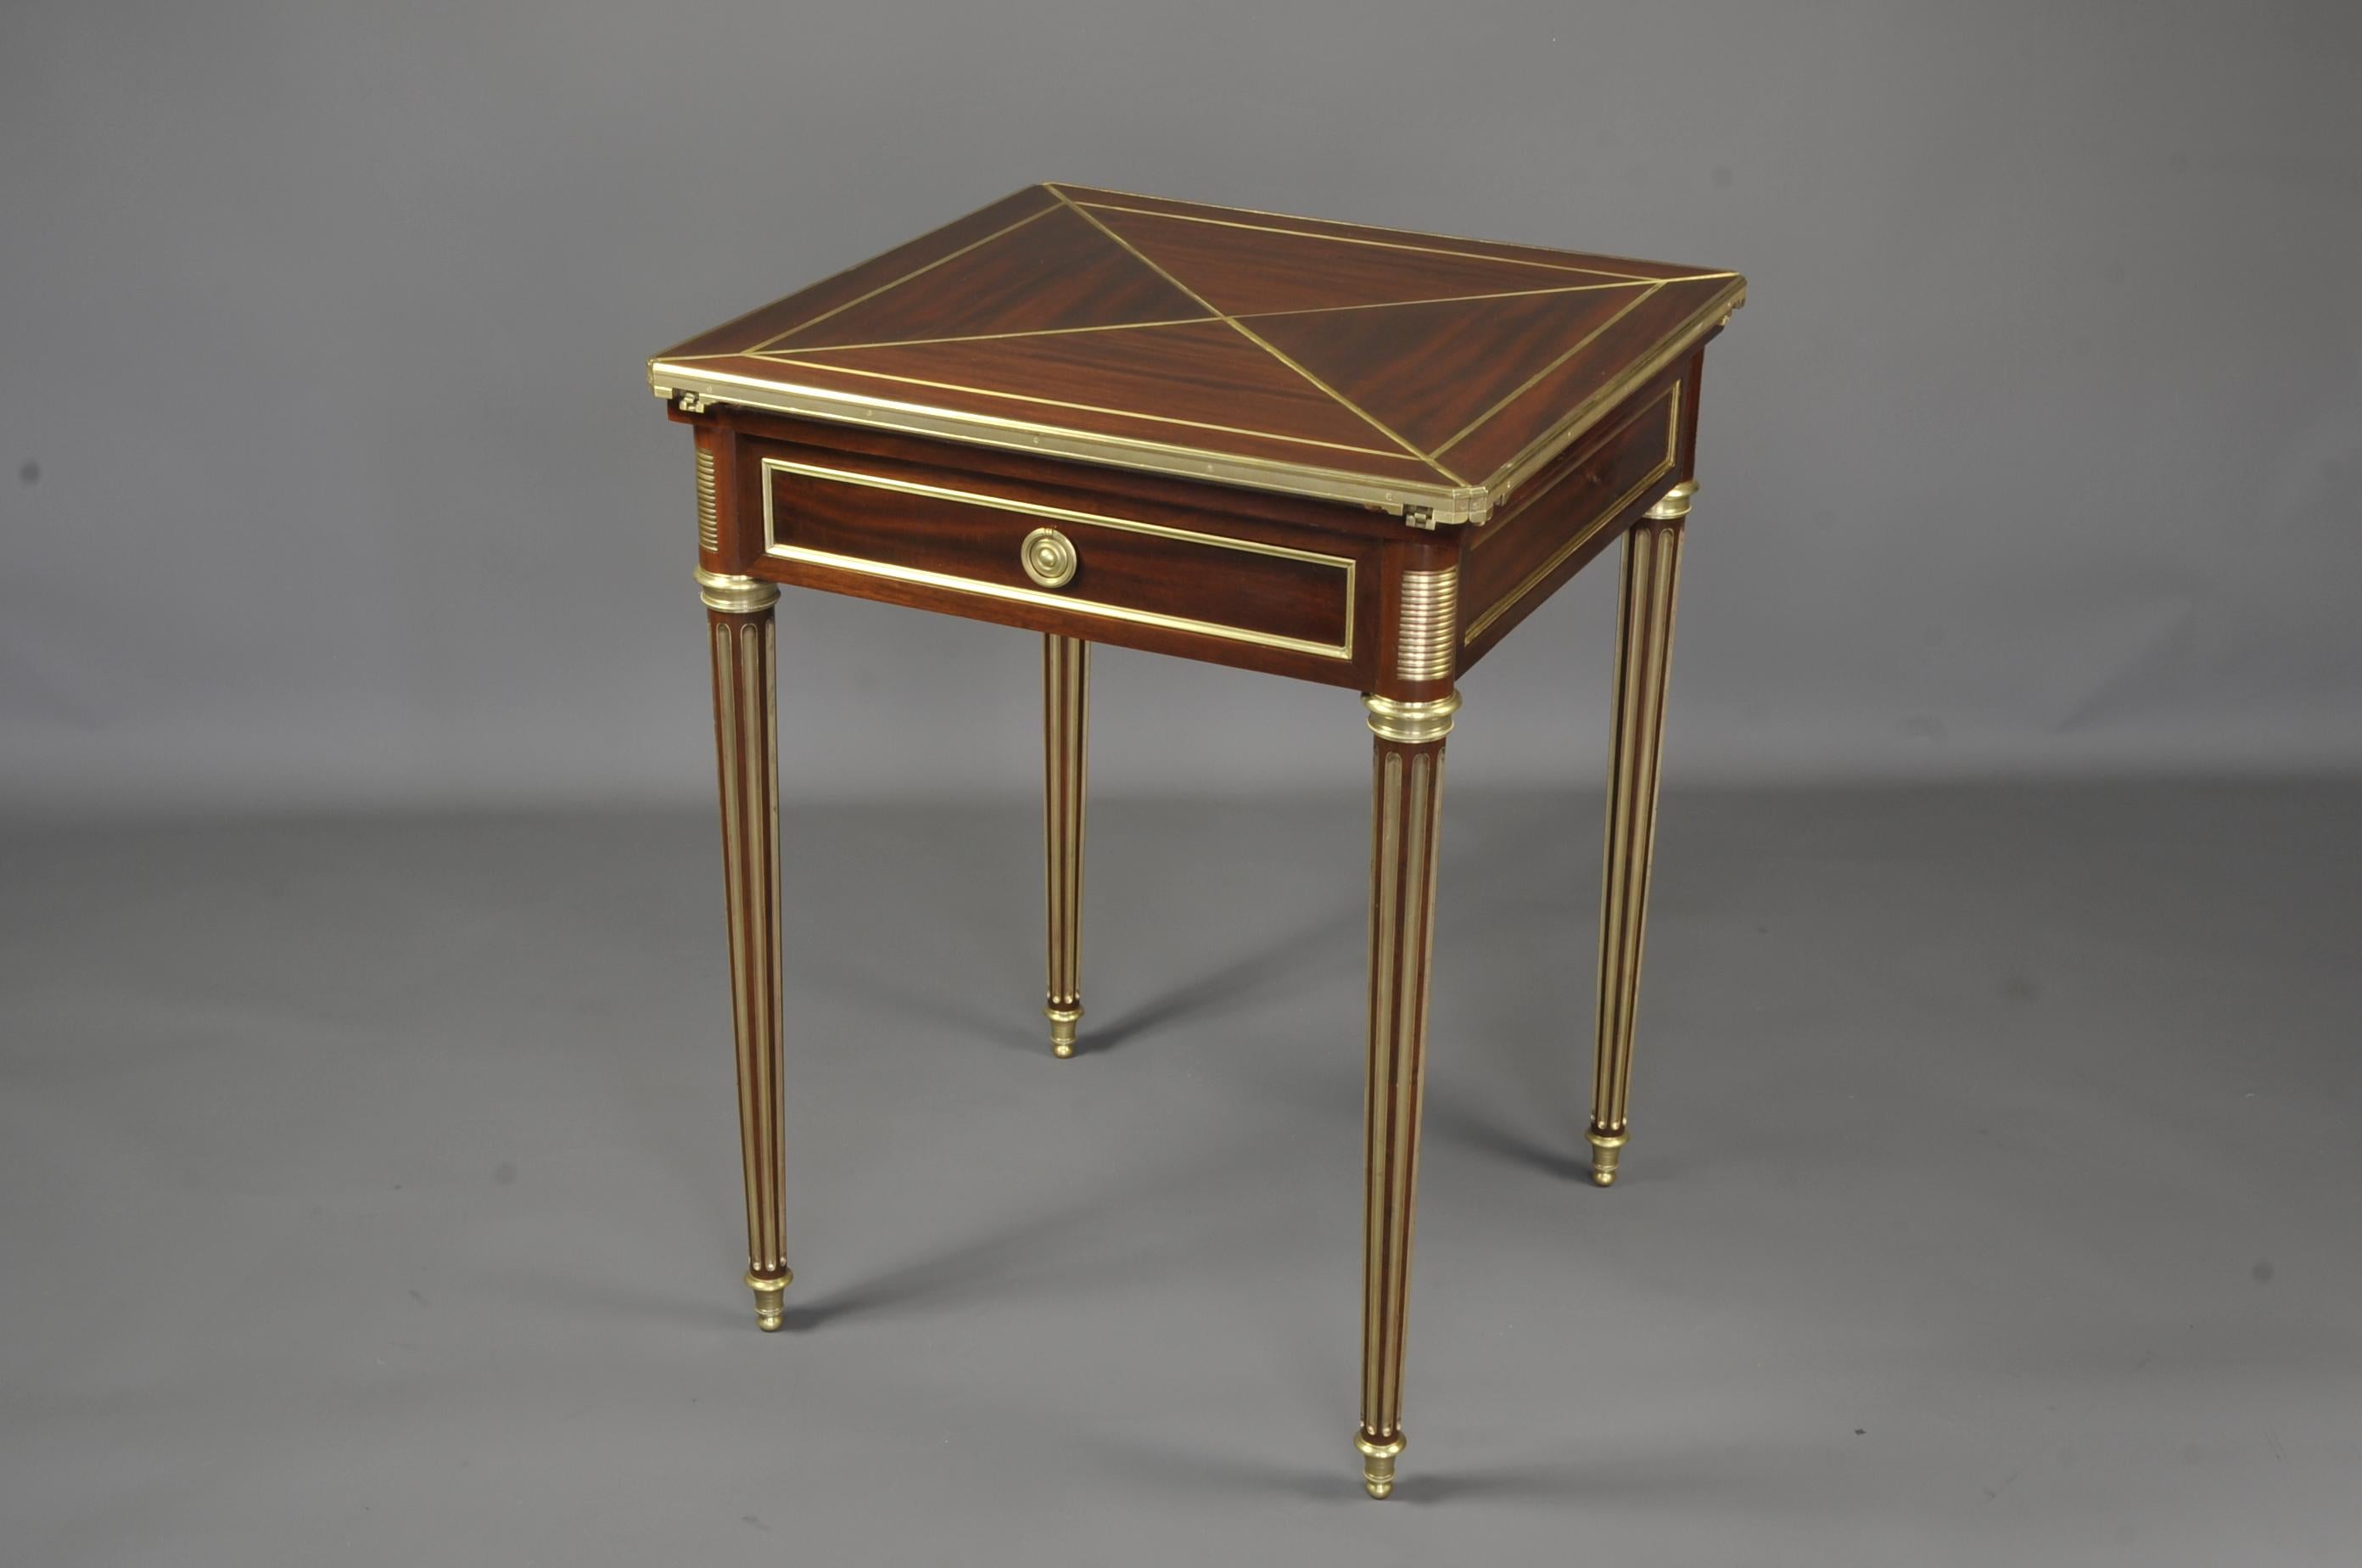 Paul Sormani (1817-1866)
Very elegant mahogany and mahogany veneer games table with a so-called 